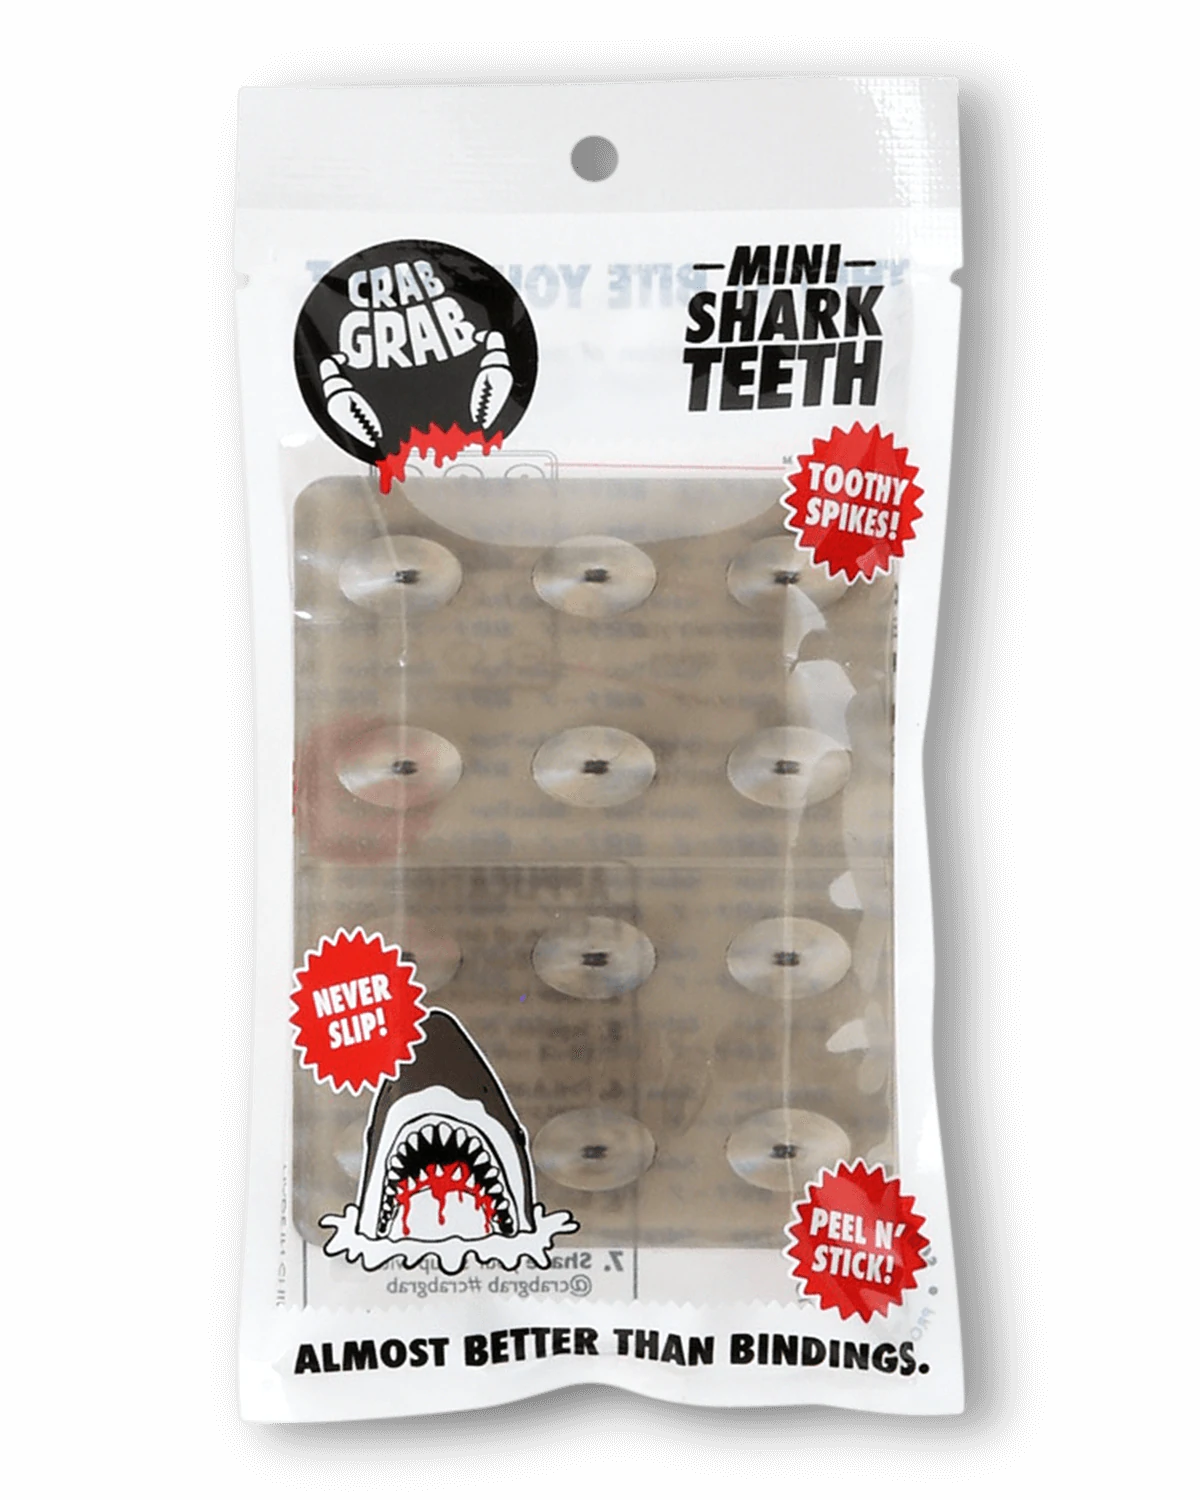 Crab Grab Mini Shark Teeth